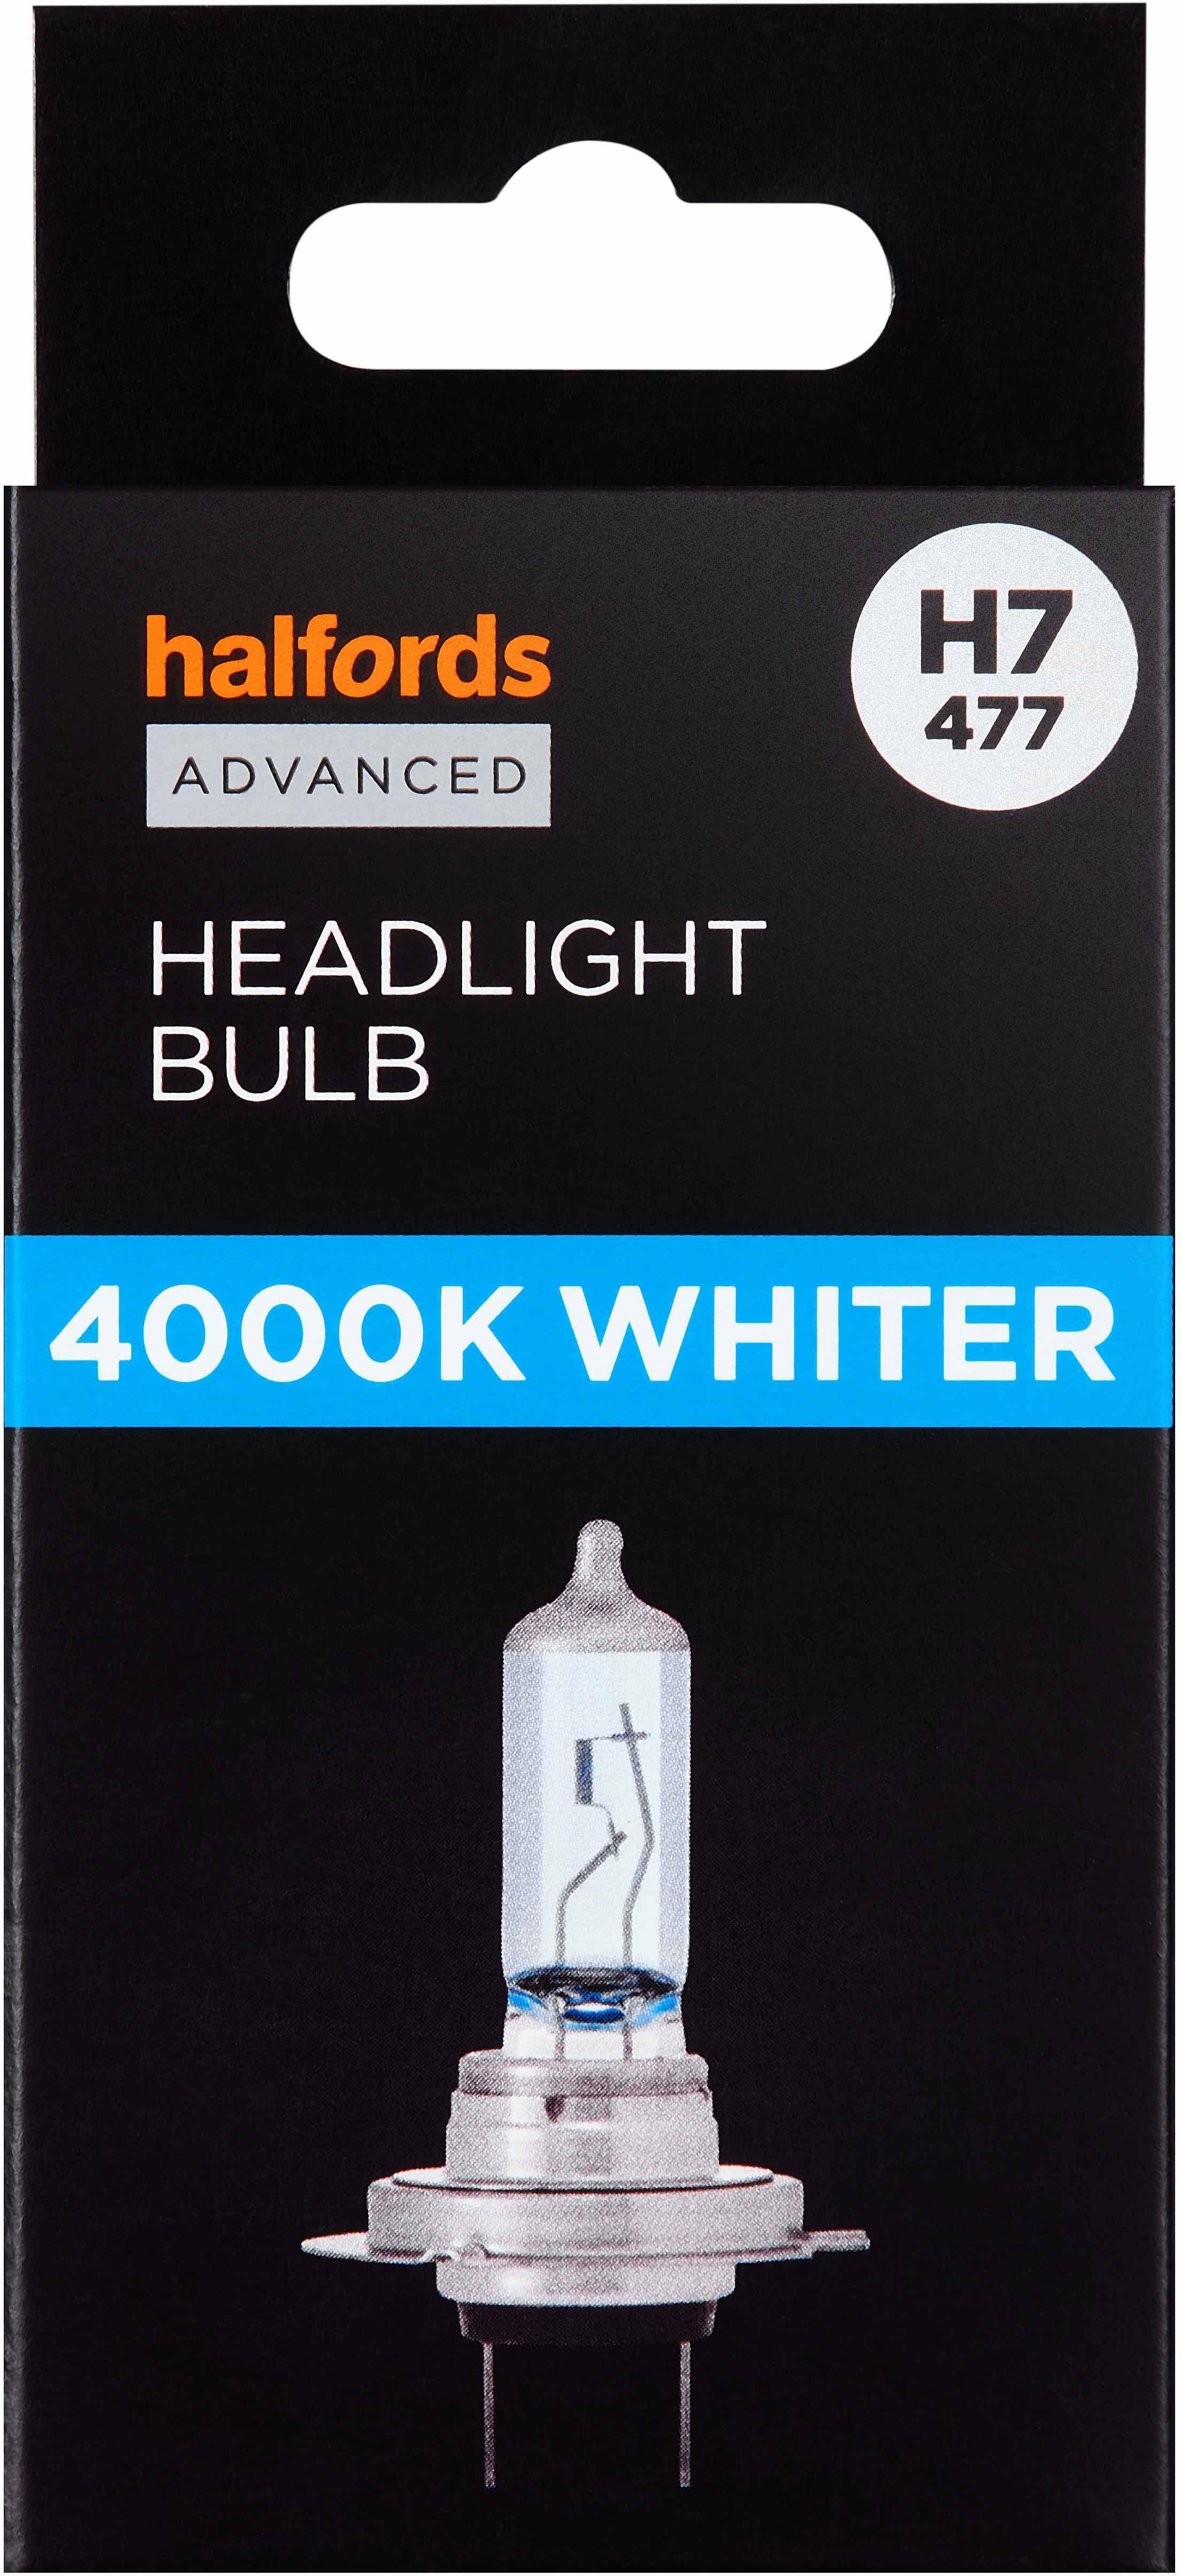 H7 477 Car Headlight Bulb Halfords Advanced White4000 Single Pack